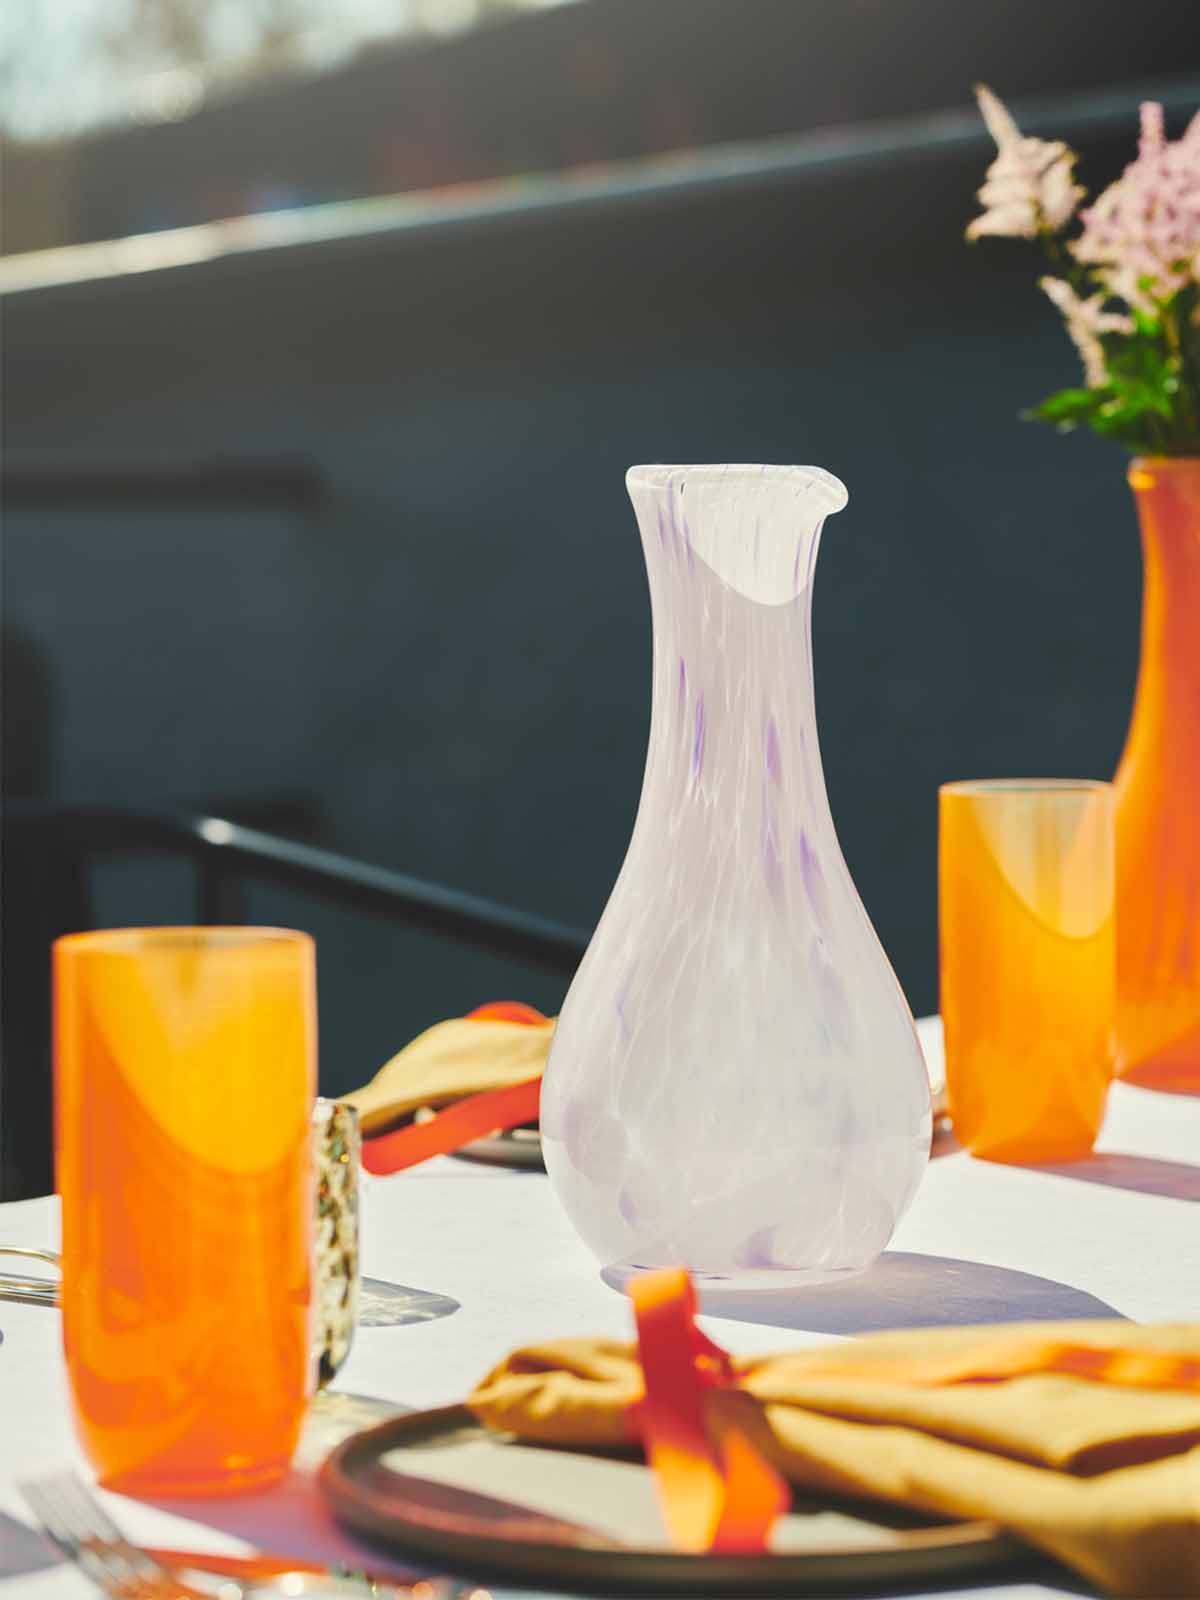 Vandglas i orange glas H15xD7cm